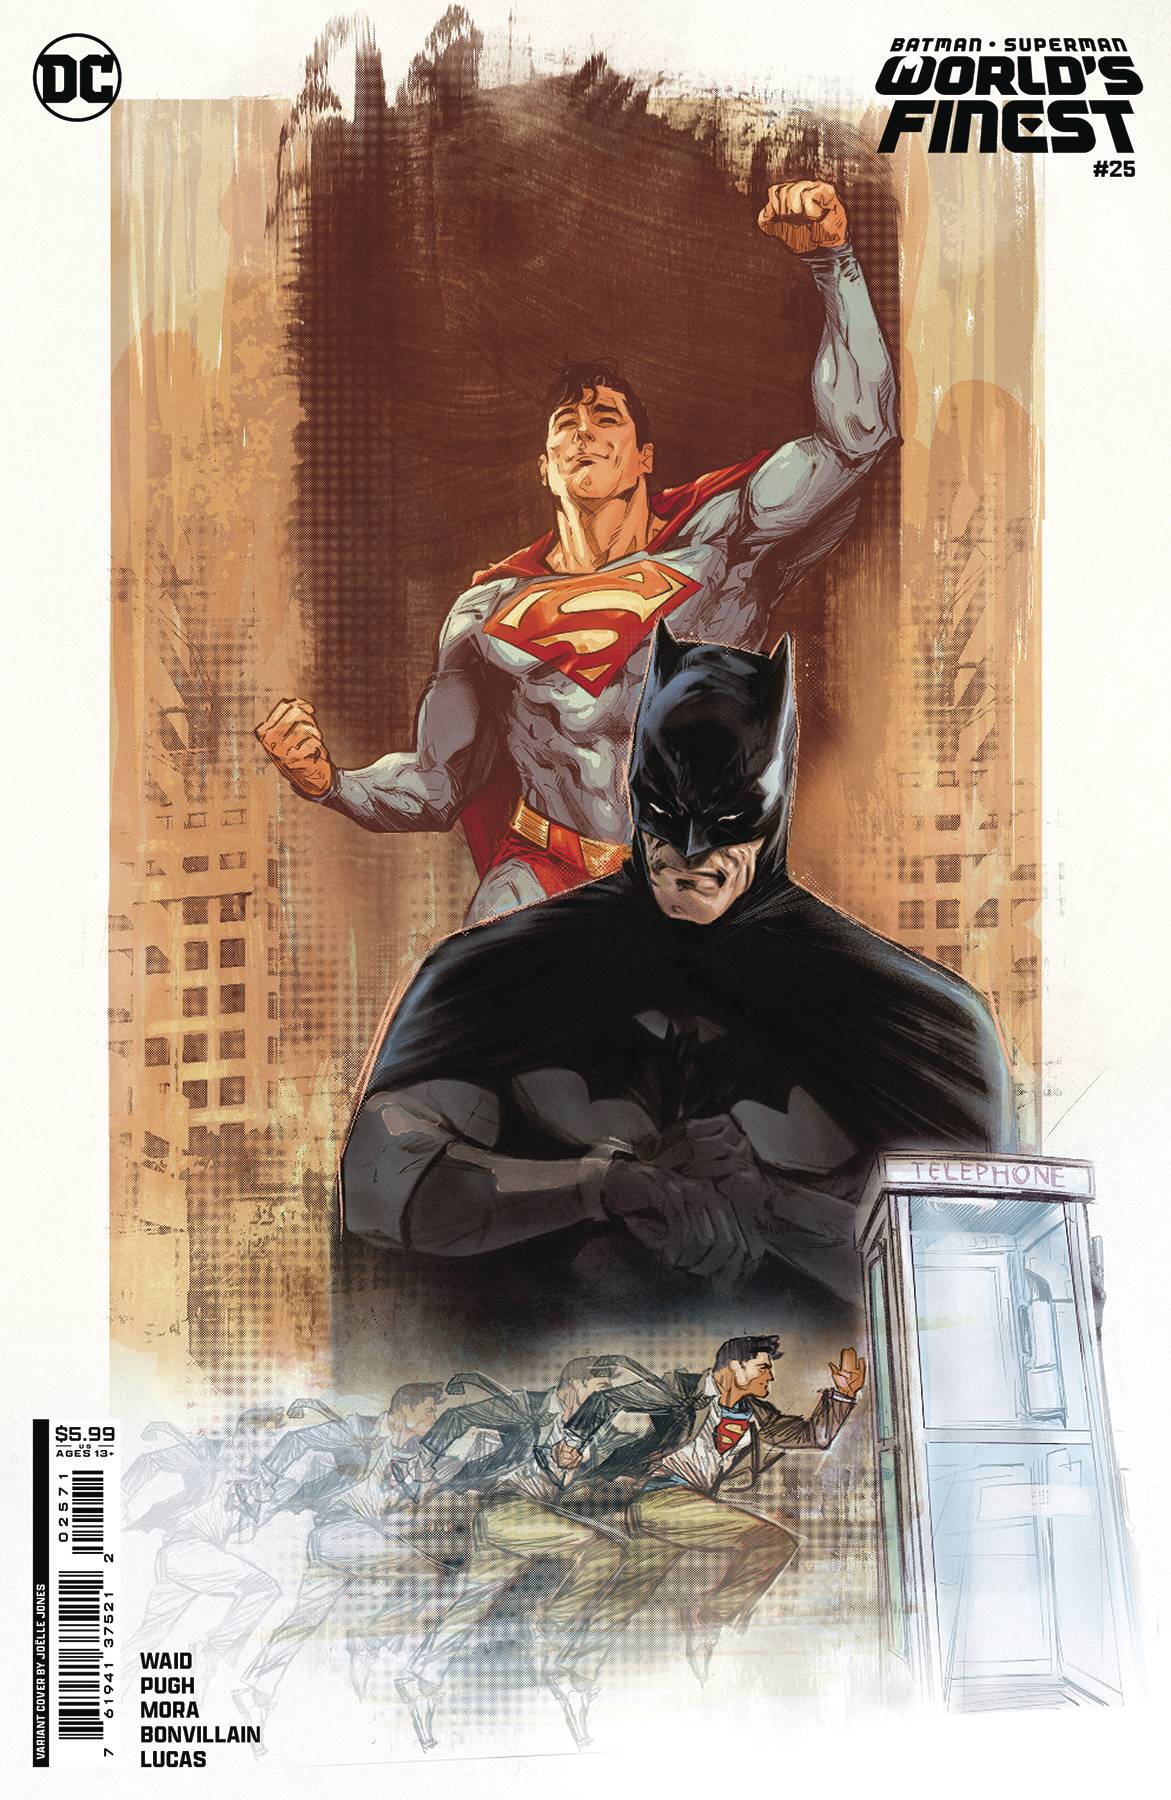 BATMAN SUPERMAN WORLDS FINEST #25 CVR E JOELLE JONES - PRE ORDER [FOC 24.02]